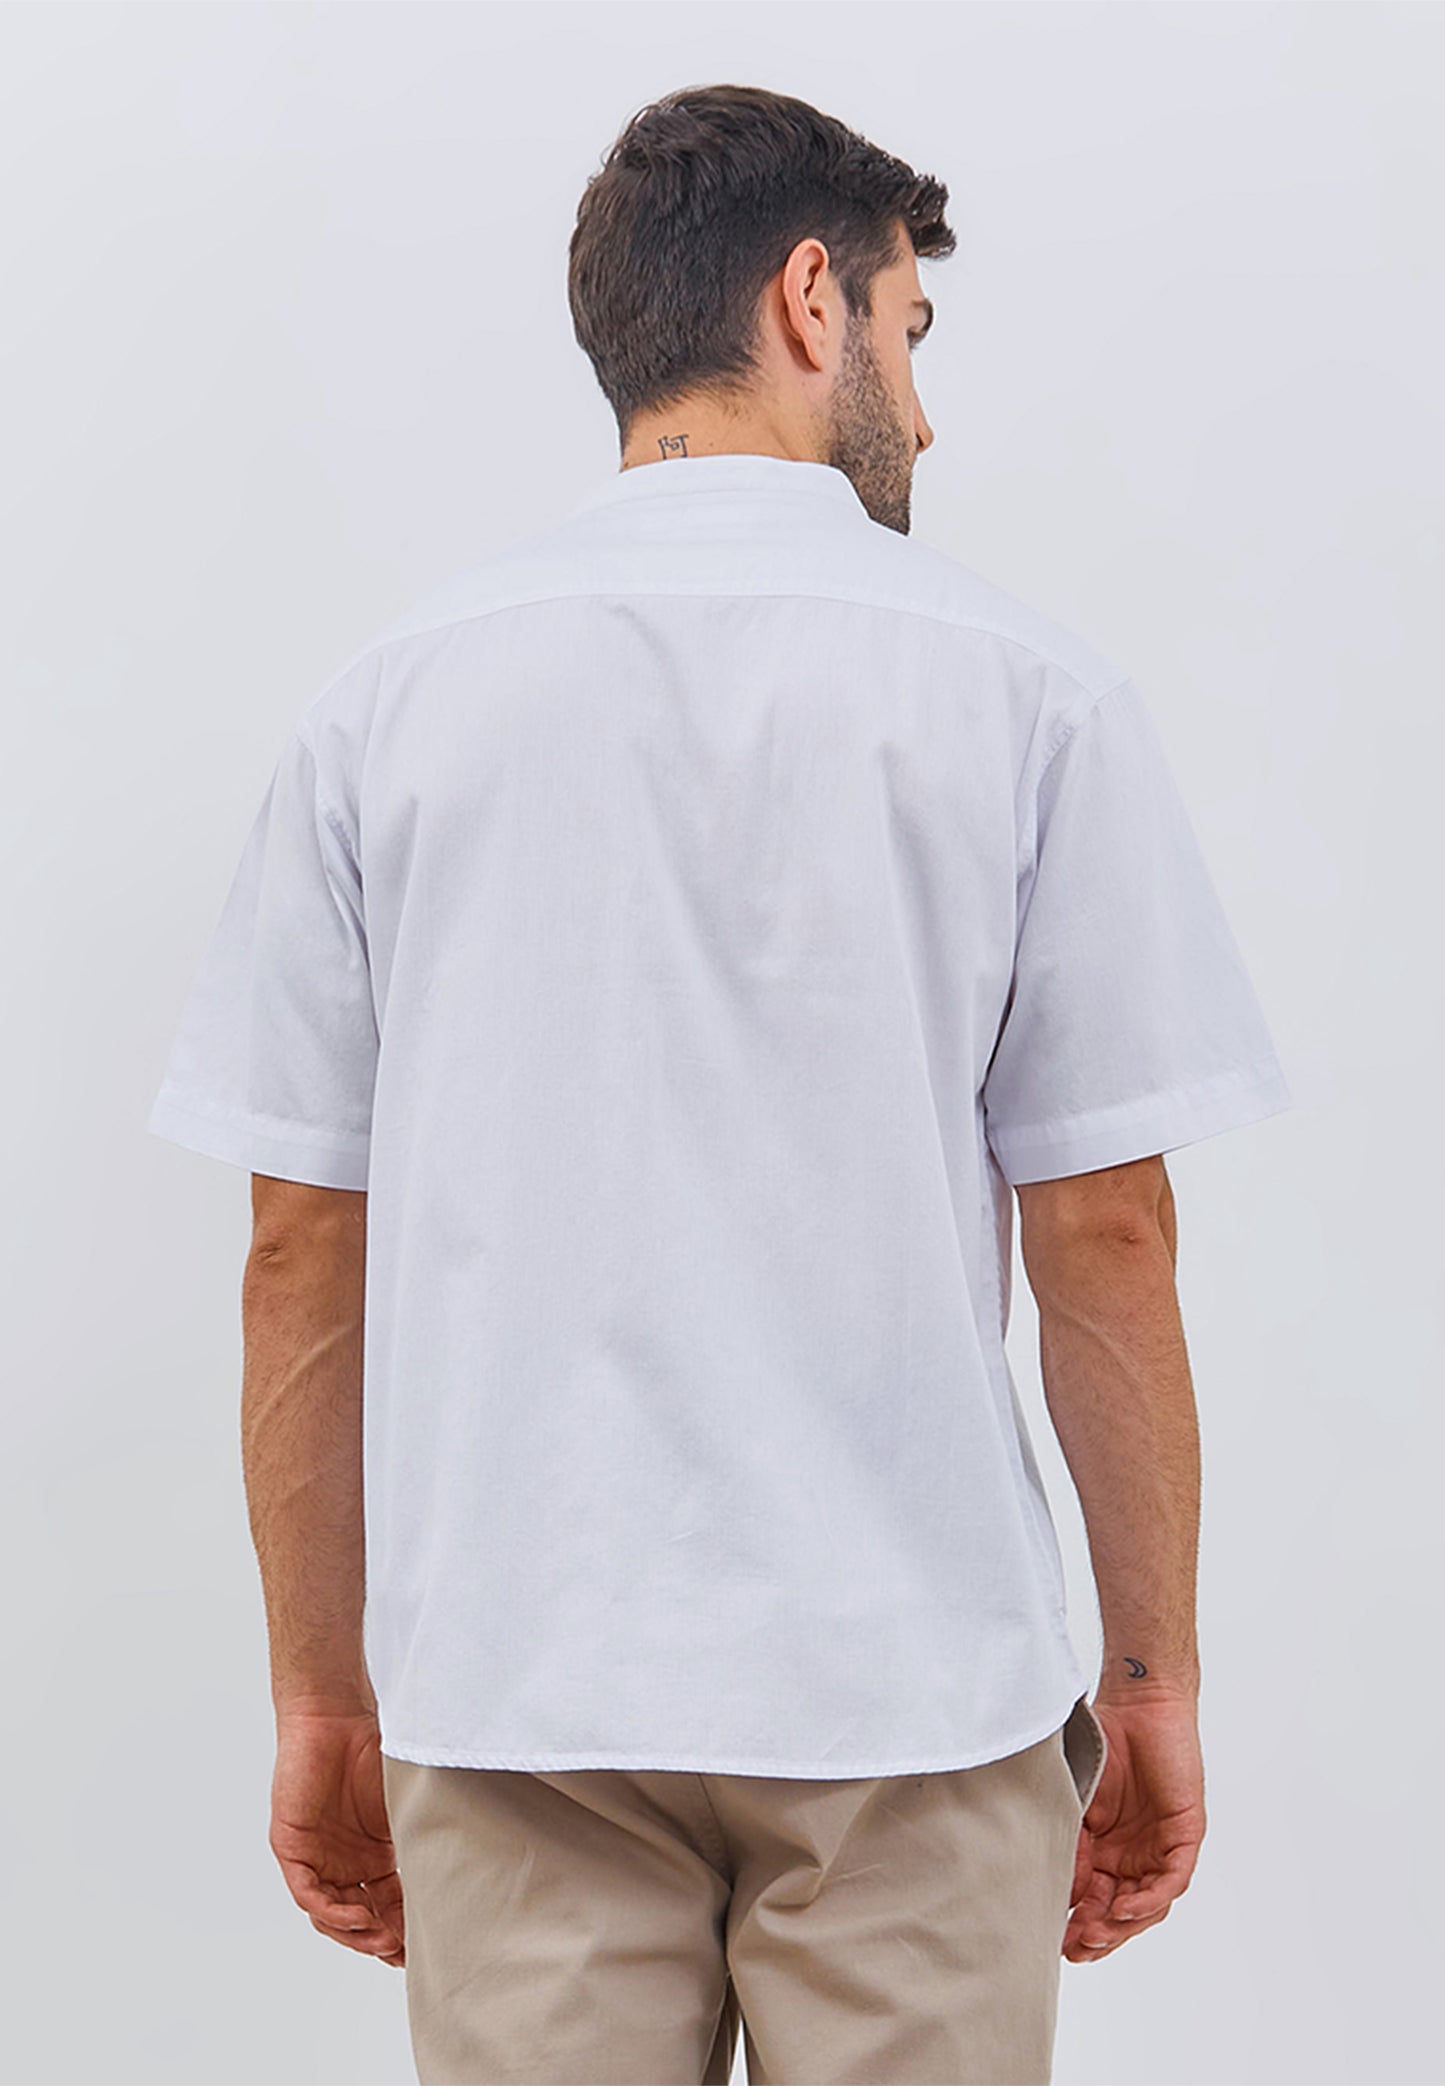 Osella Men Raya Regular Koko Collared Shirt In White